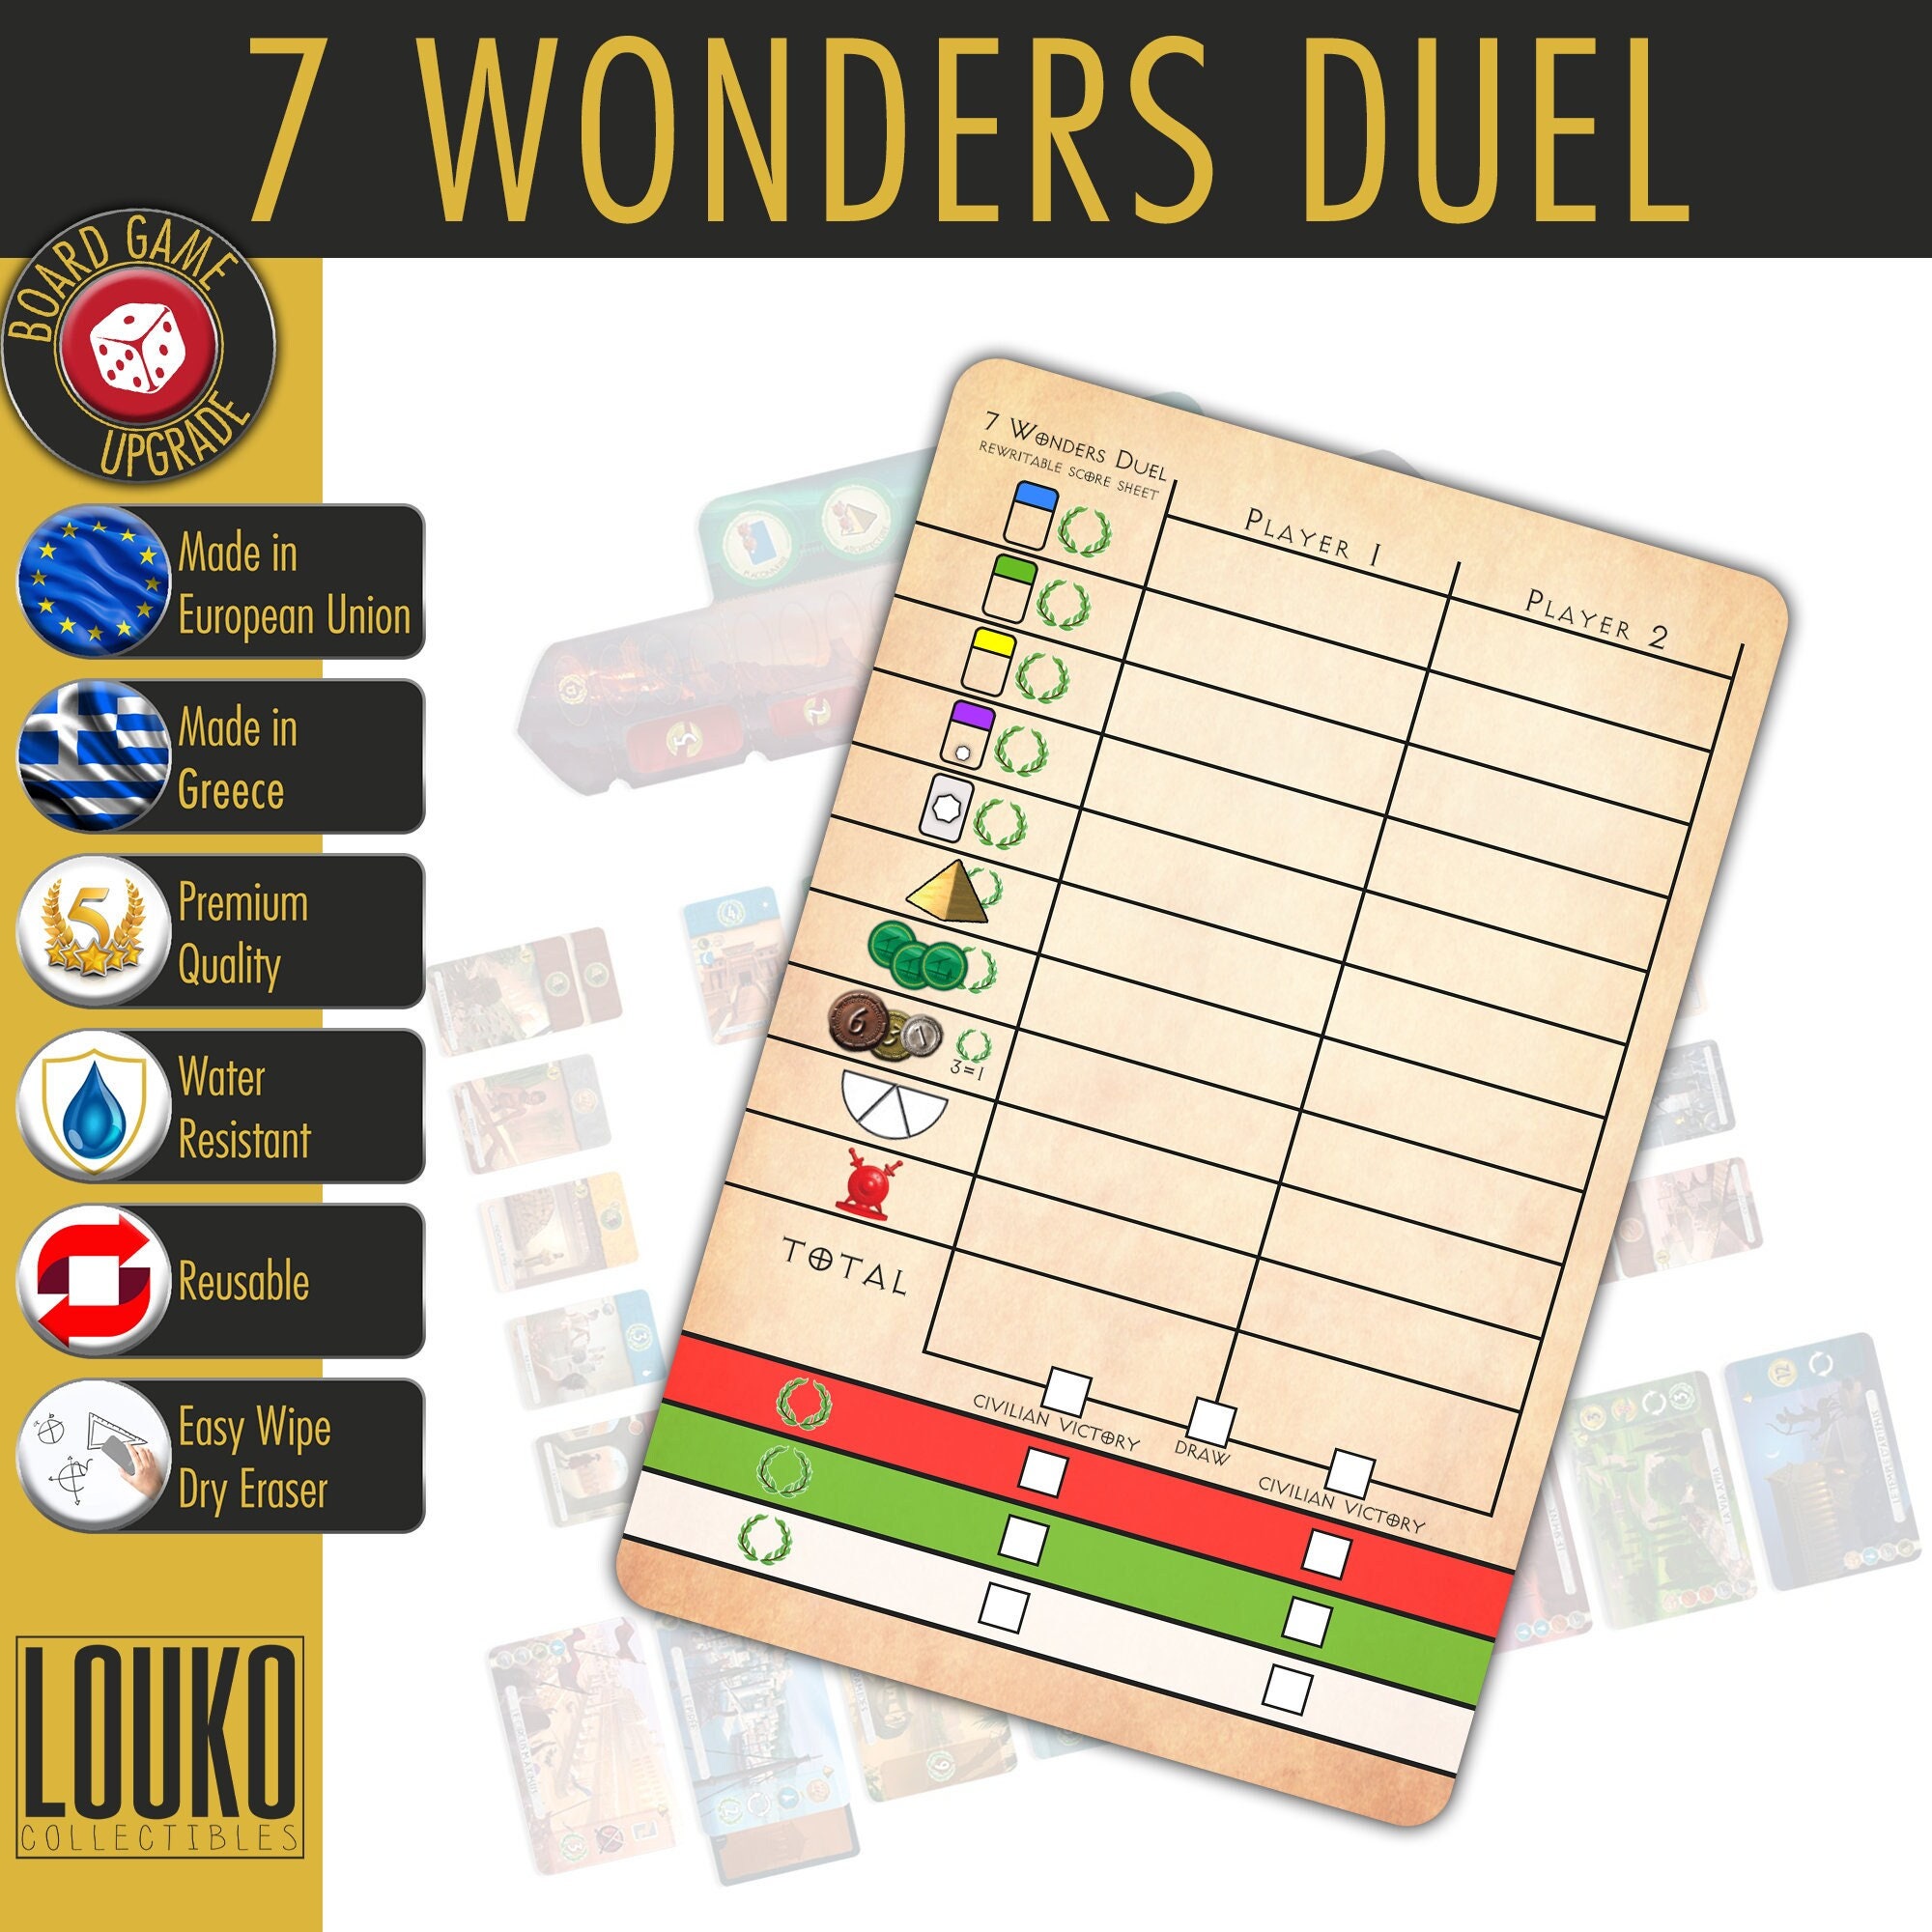 Upgrade 7 Wonders Duel Score Sheet